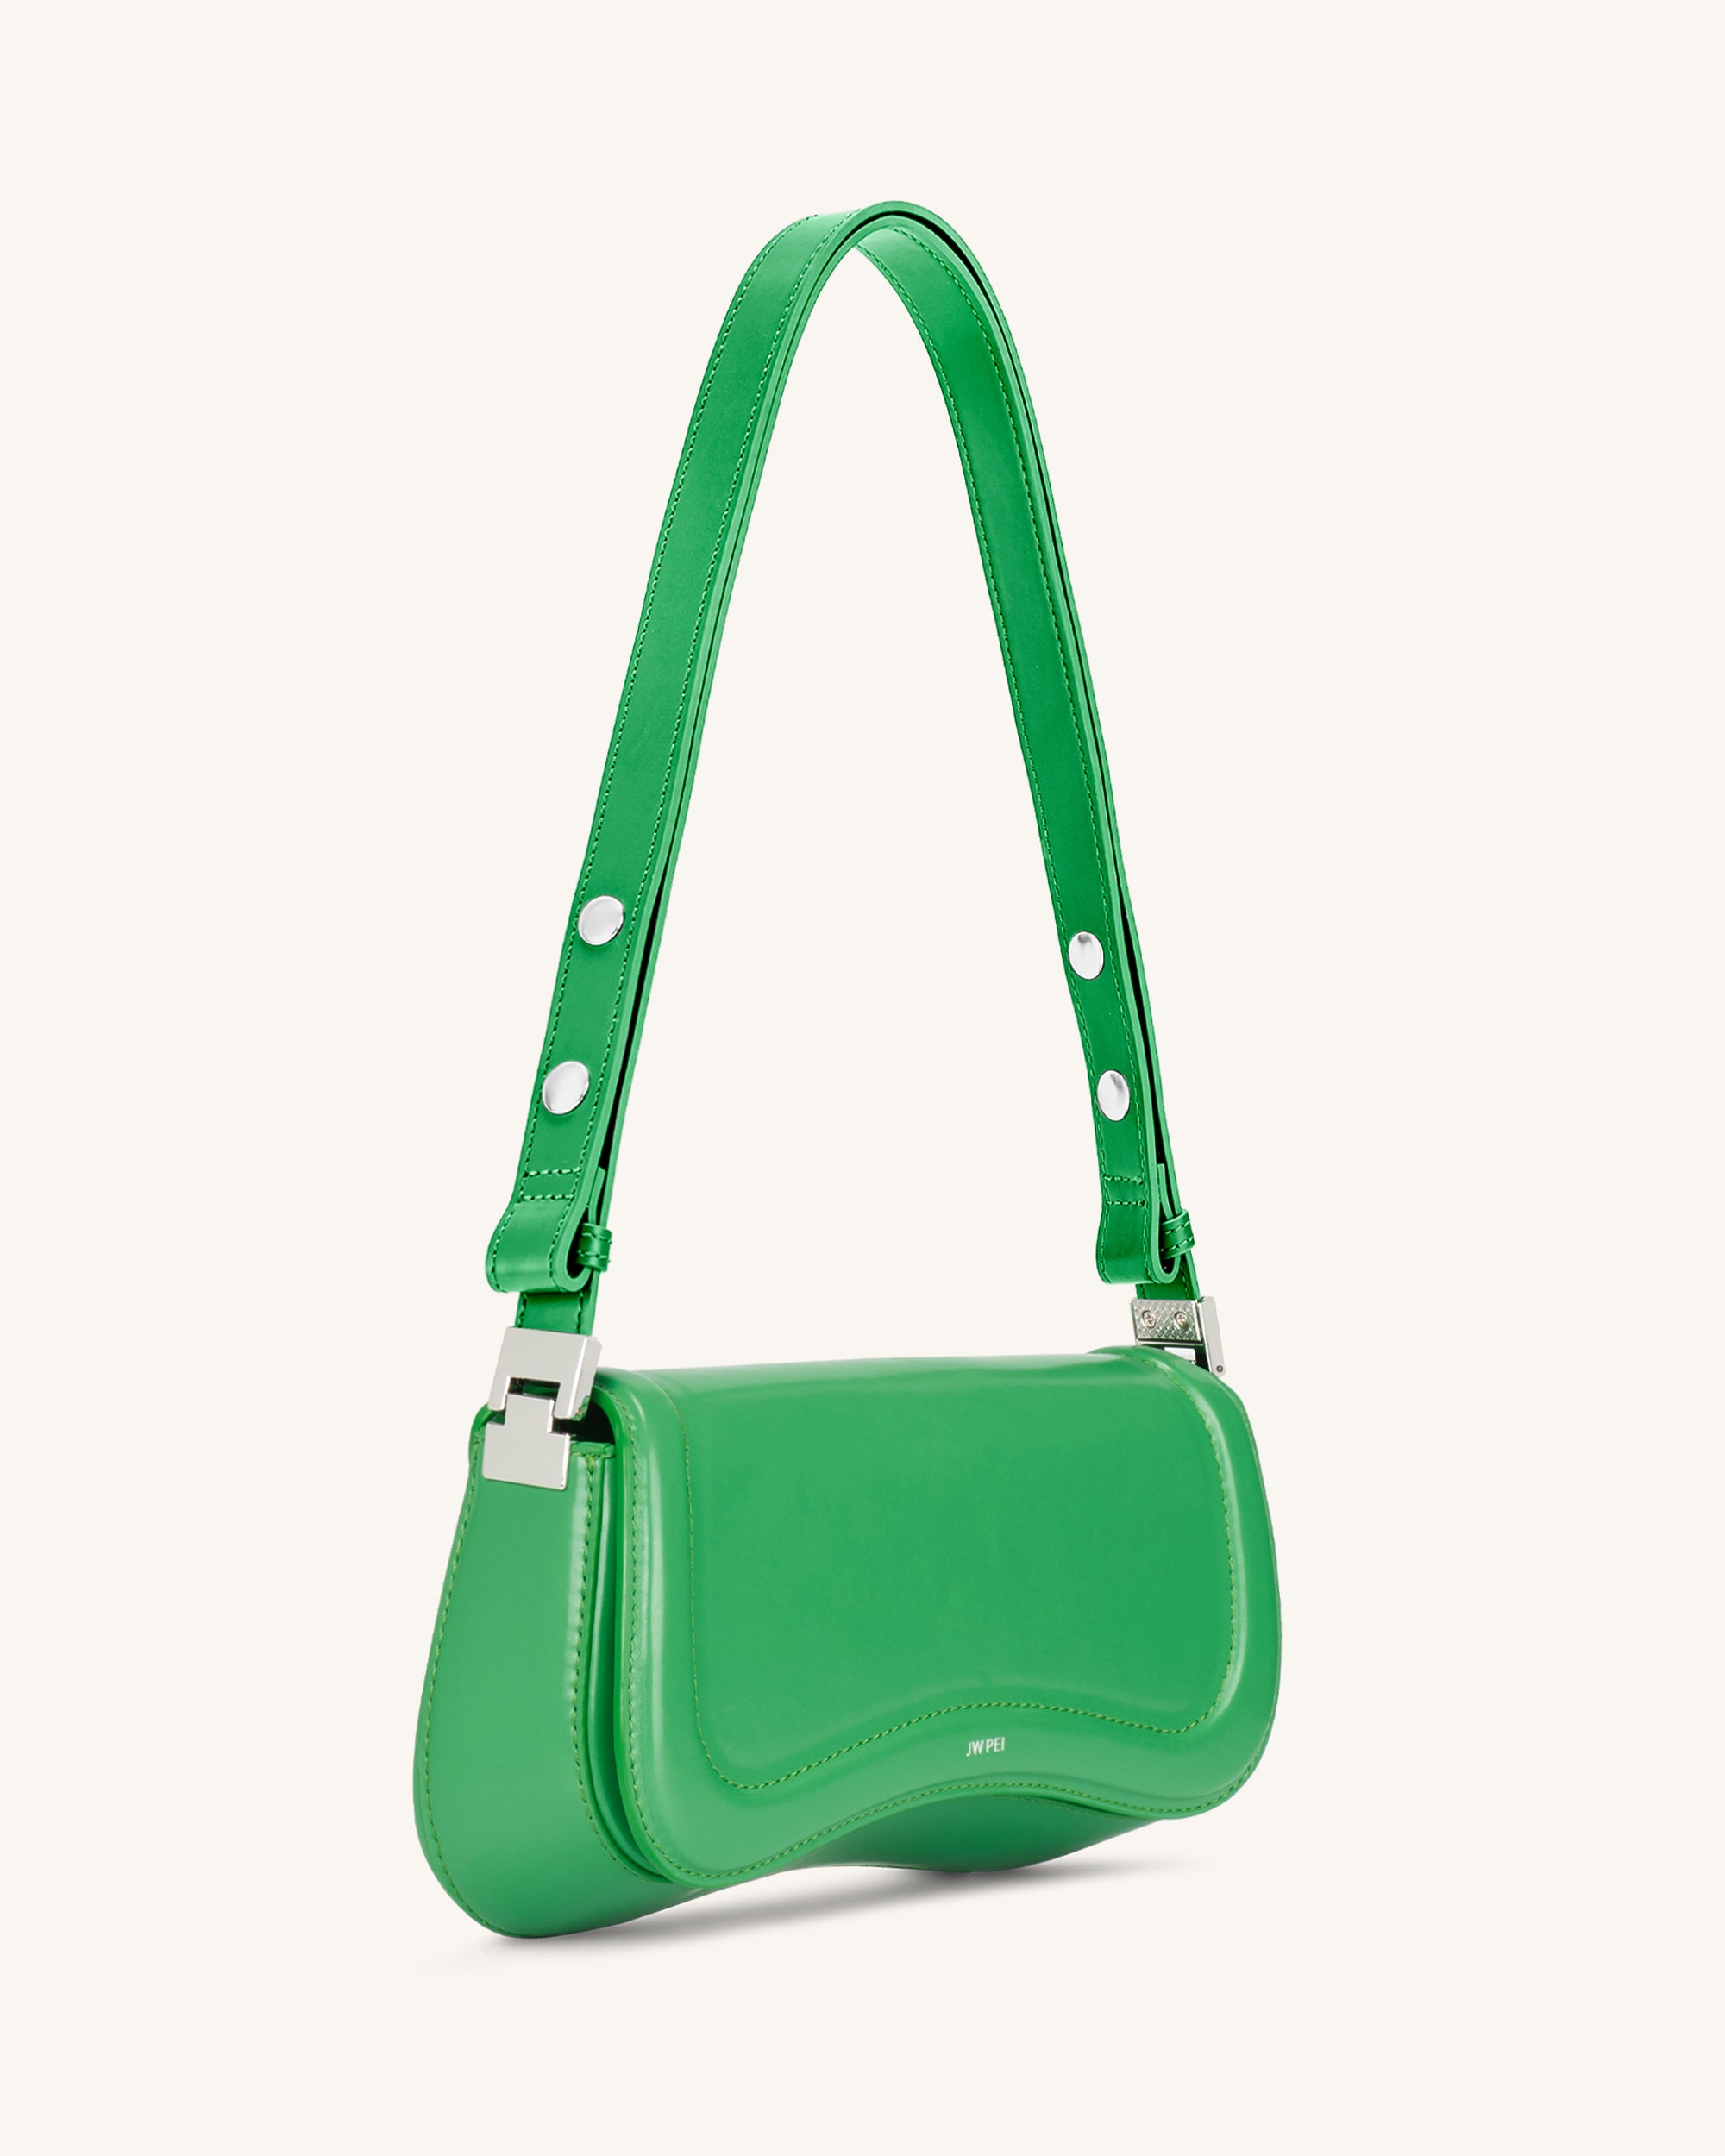 Prada Bright Olive Green Pebble Leather Shoulder /Tote Bag